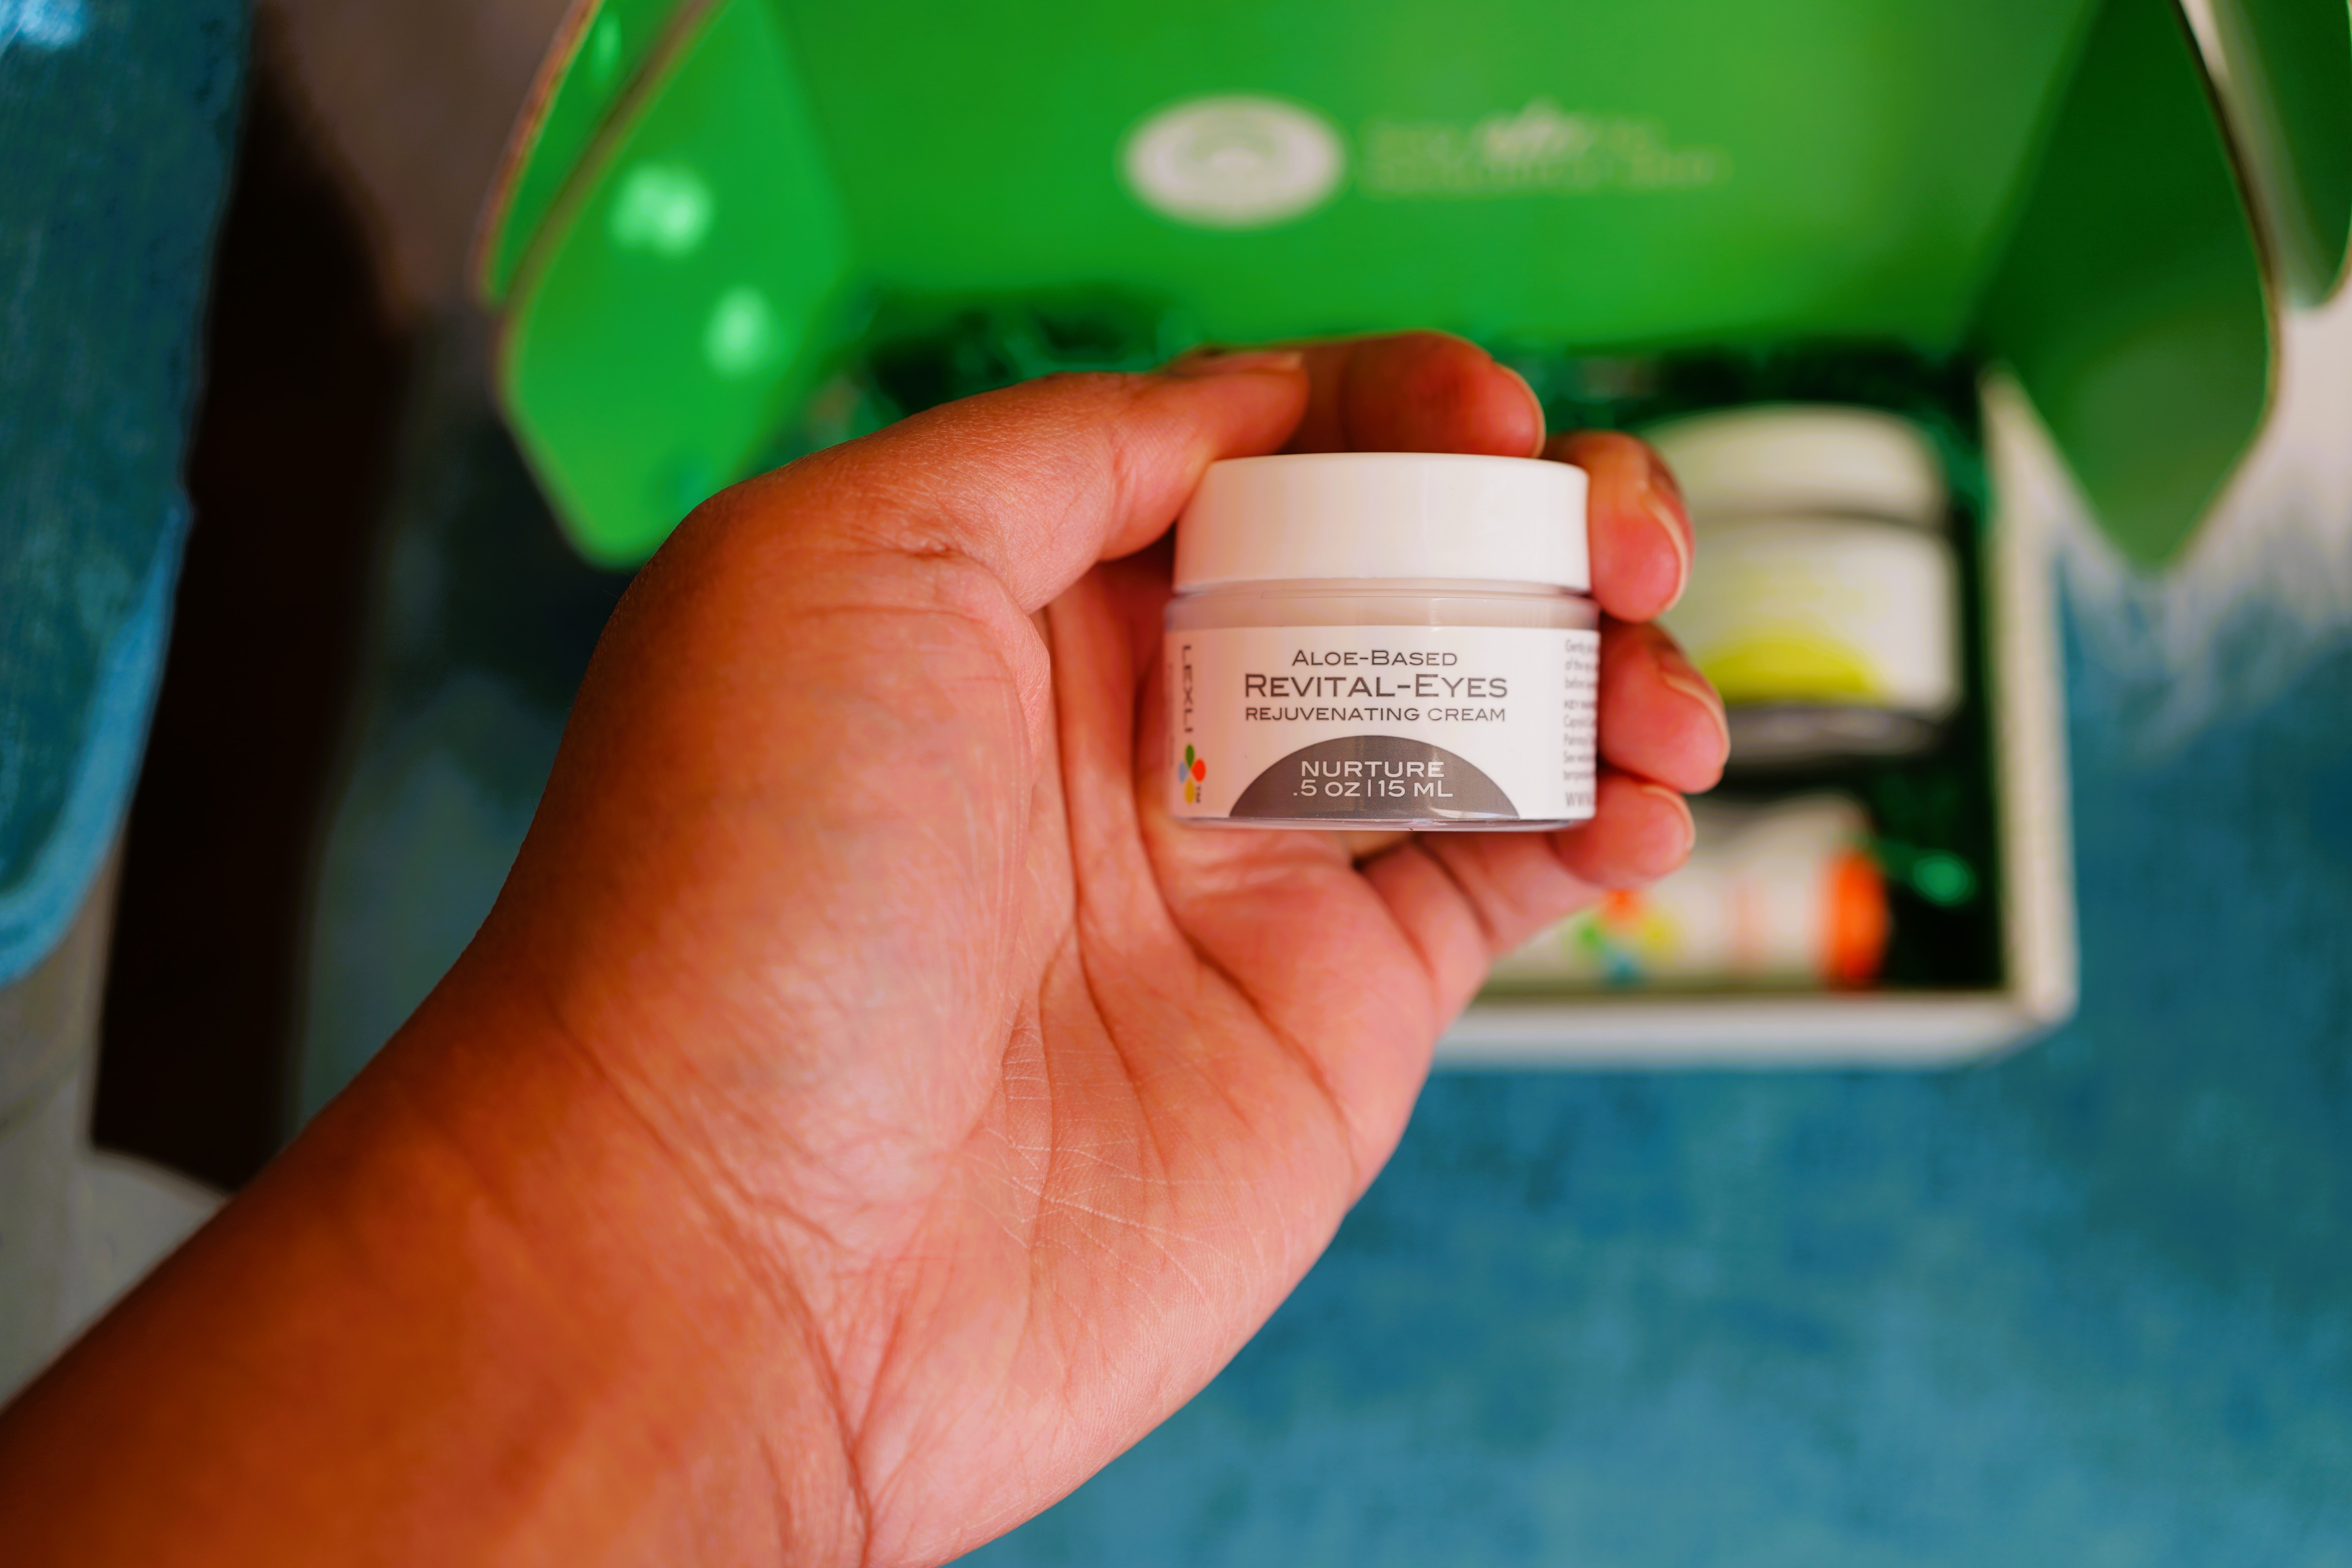 Lexli Aloe-Based Revital-Eyes Rejuvenating Cream